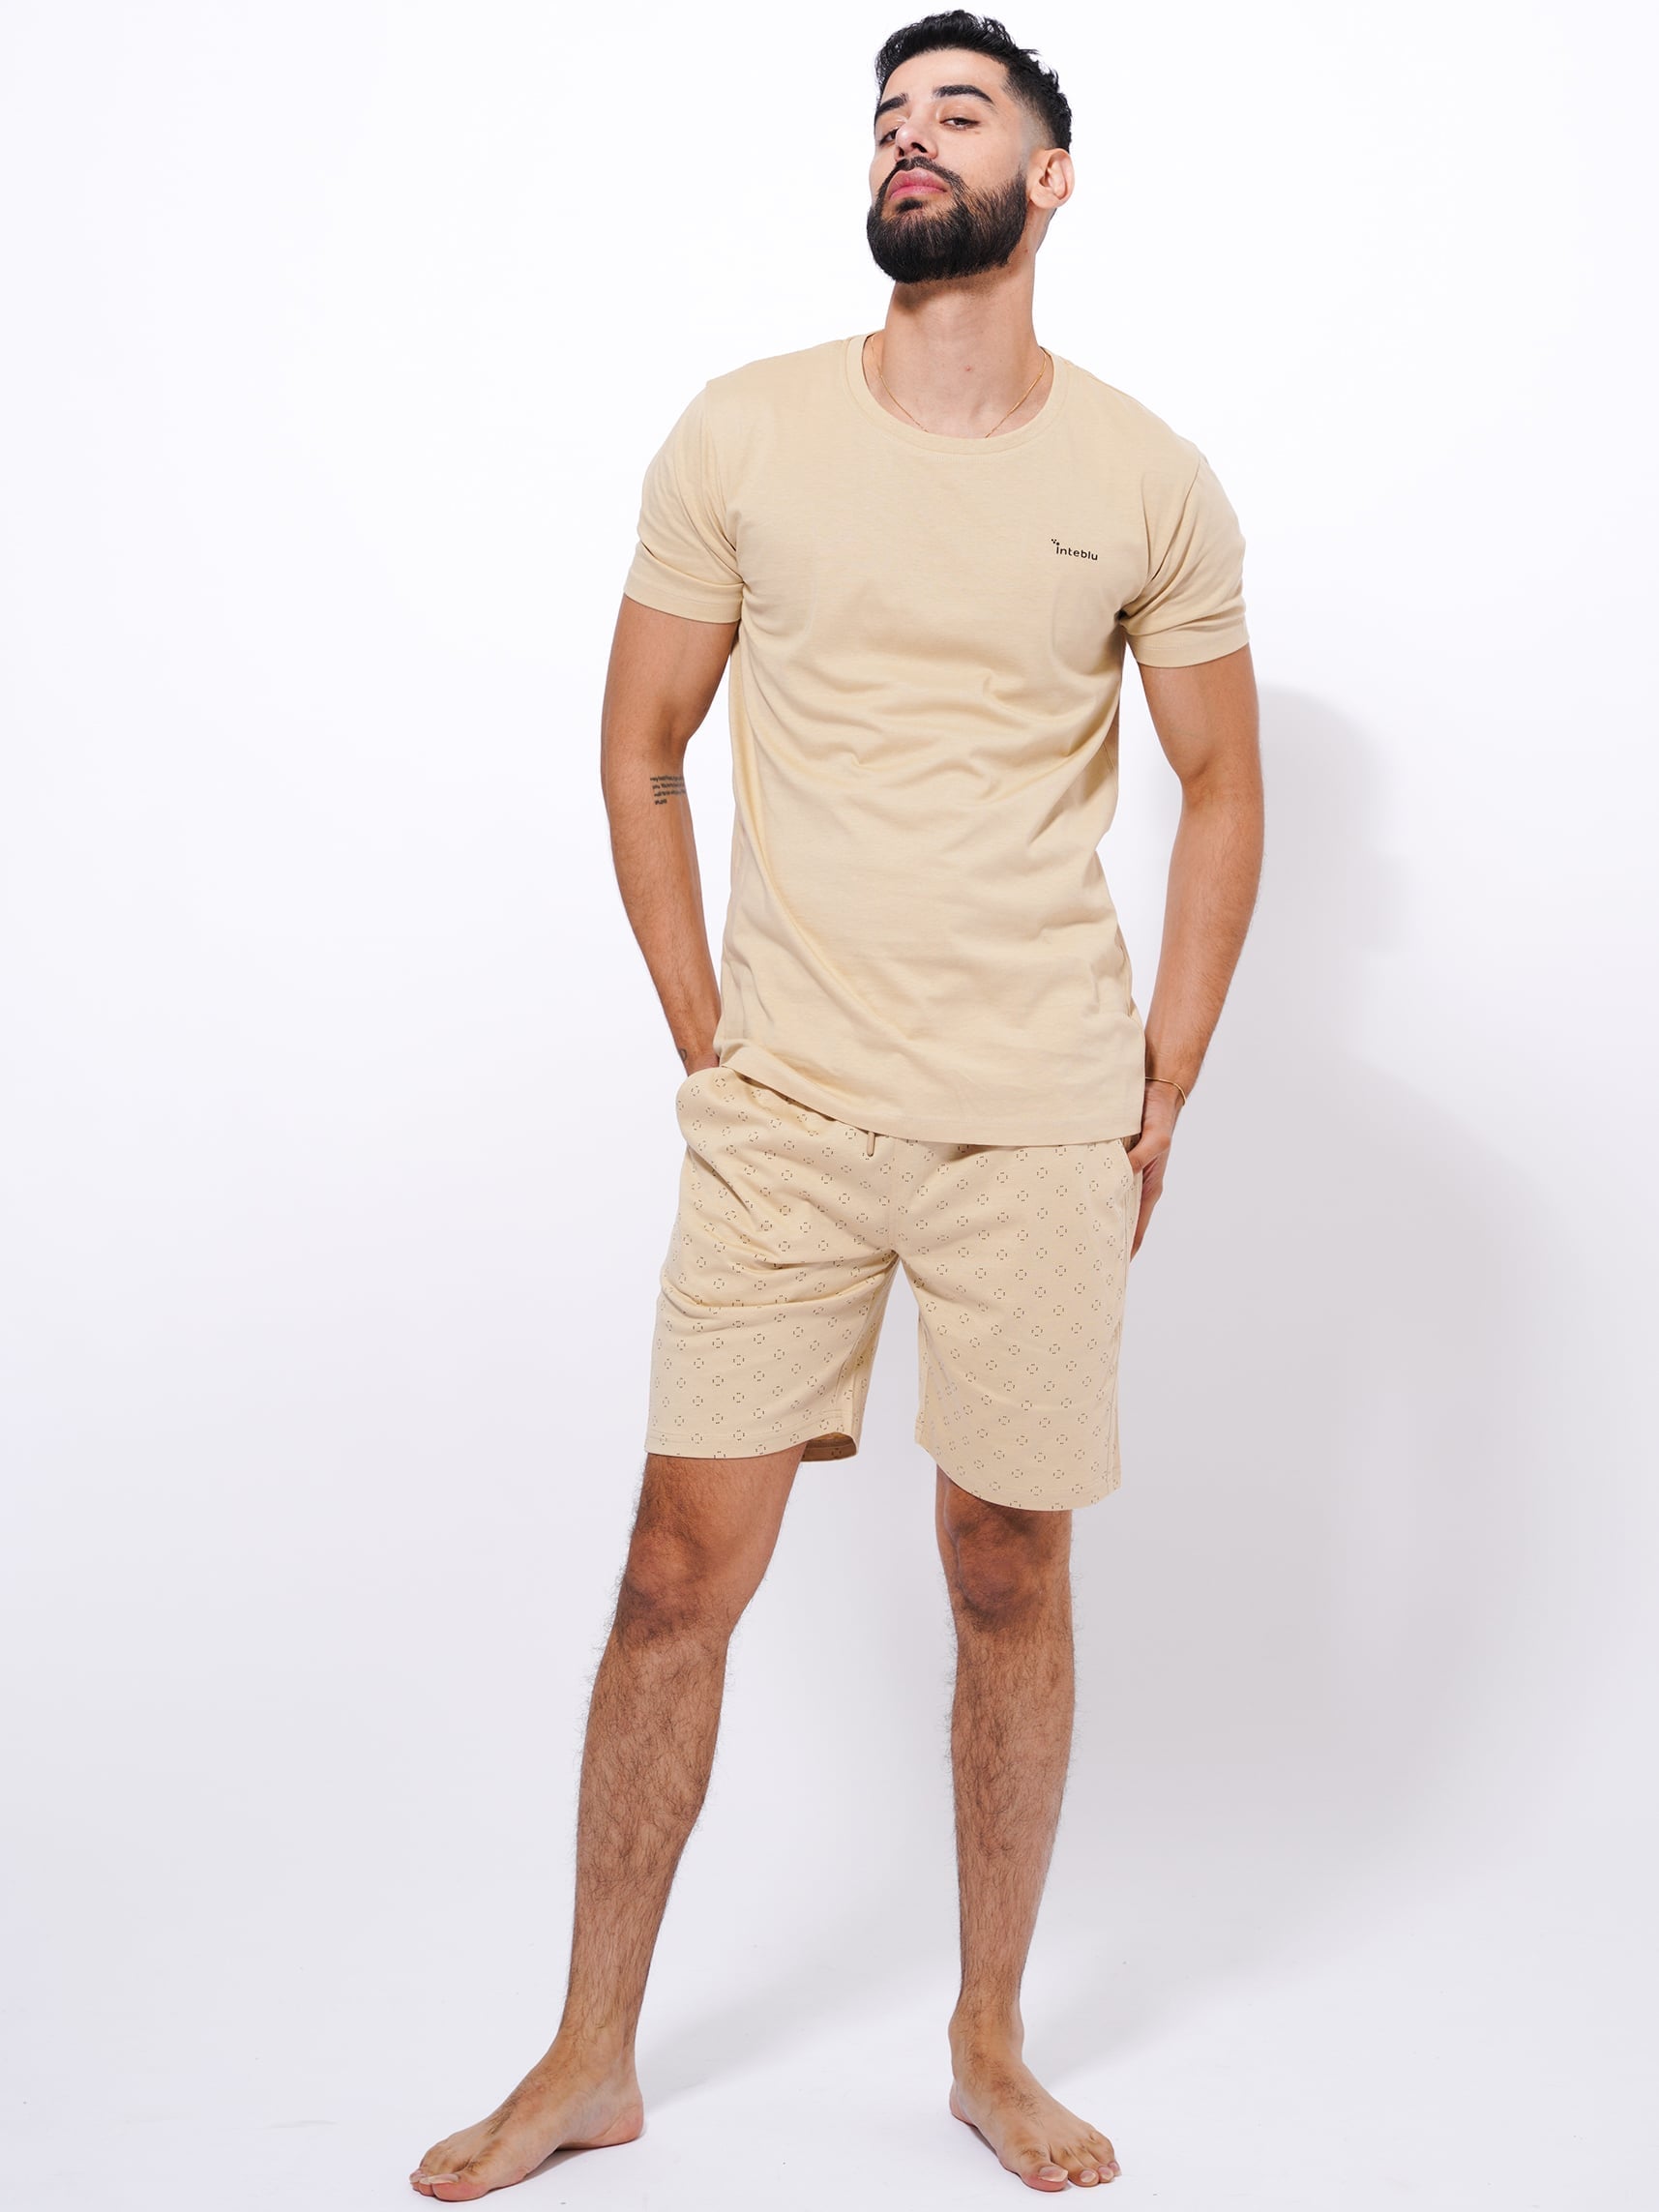 Slim Fit T-Shirt & Shorts Set - Printed Summer Outfit - inteblu